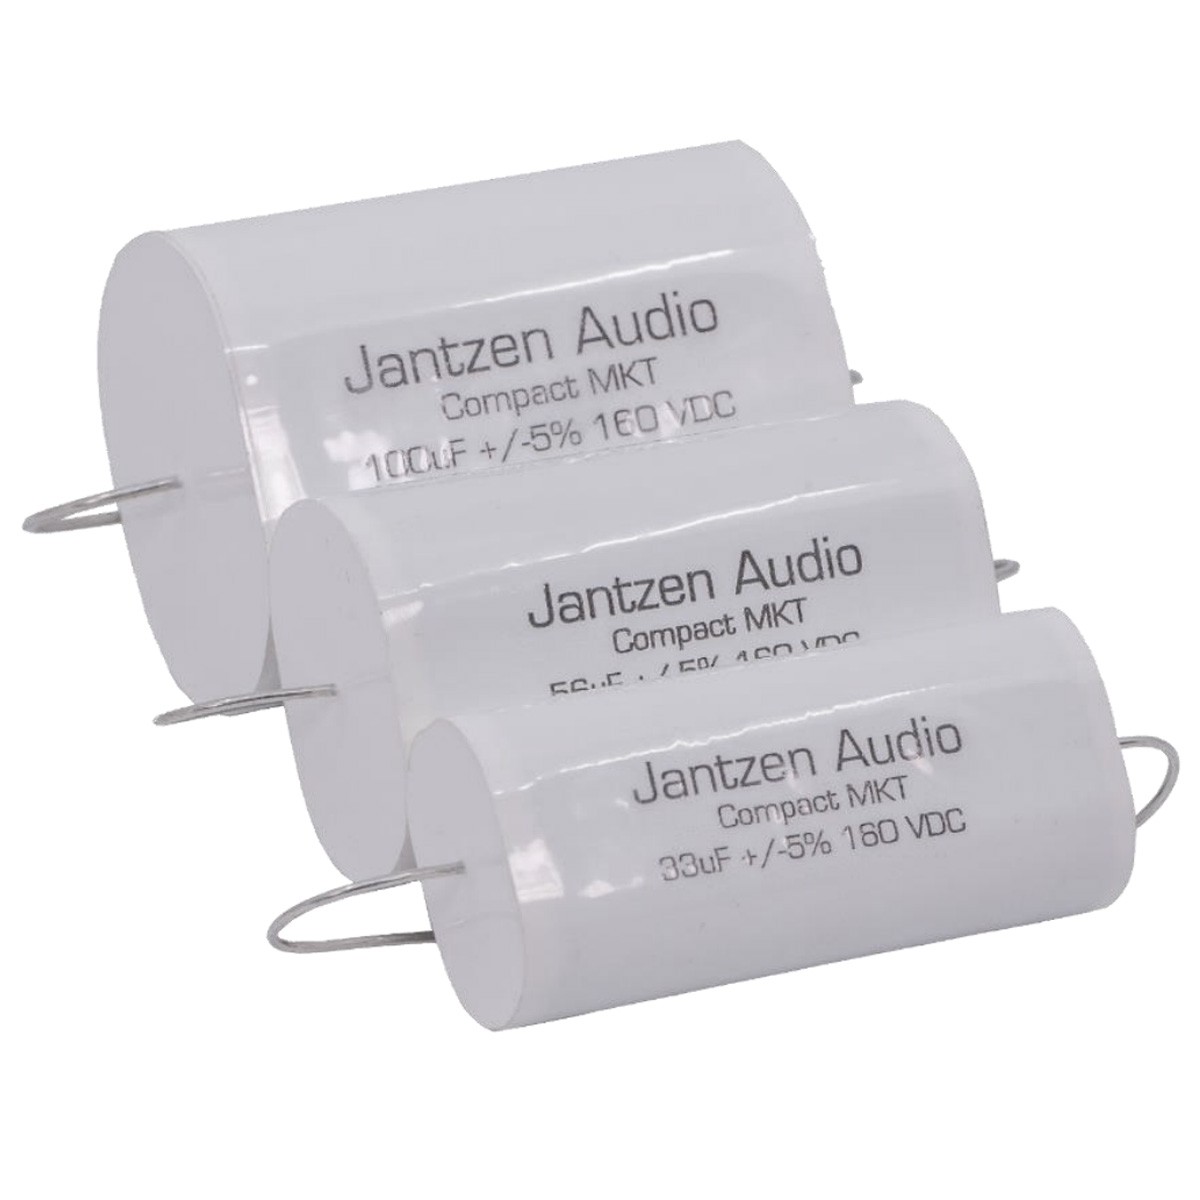 JANTZEN AUDIO COMPACT MKT 001-8110 Condensateur MKT Axial 160V 12µF